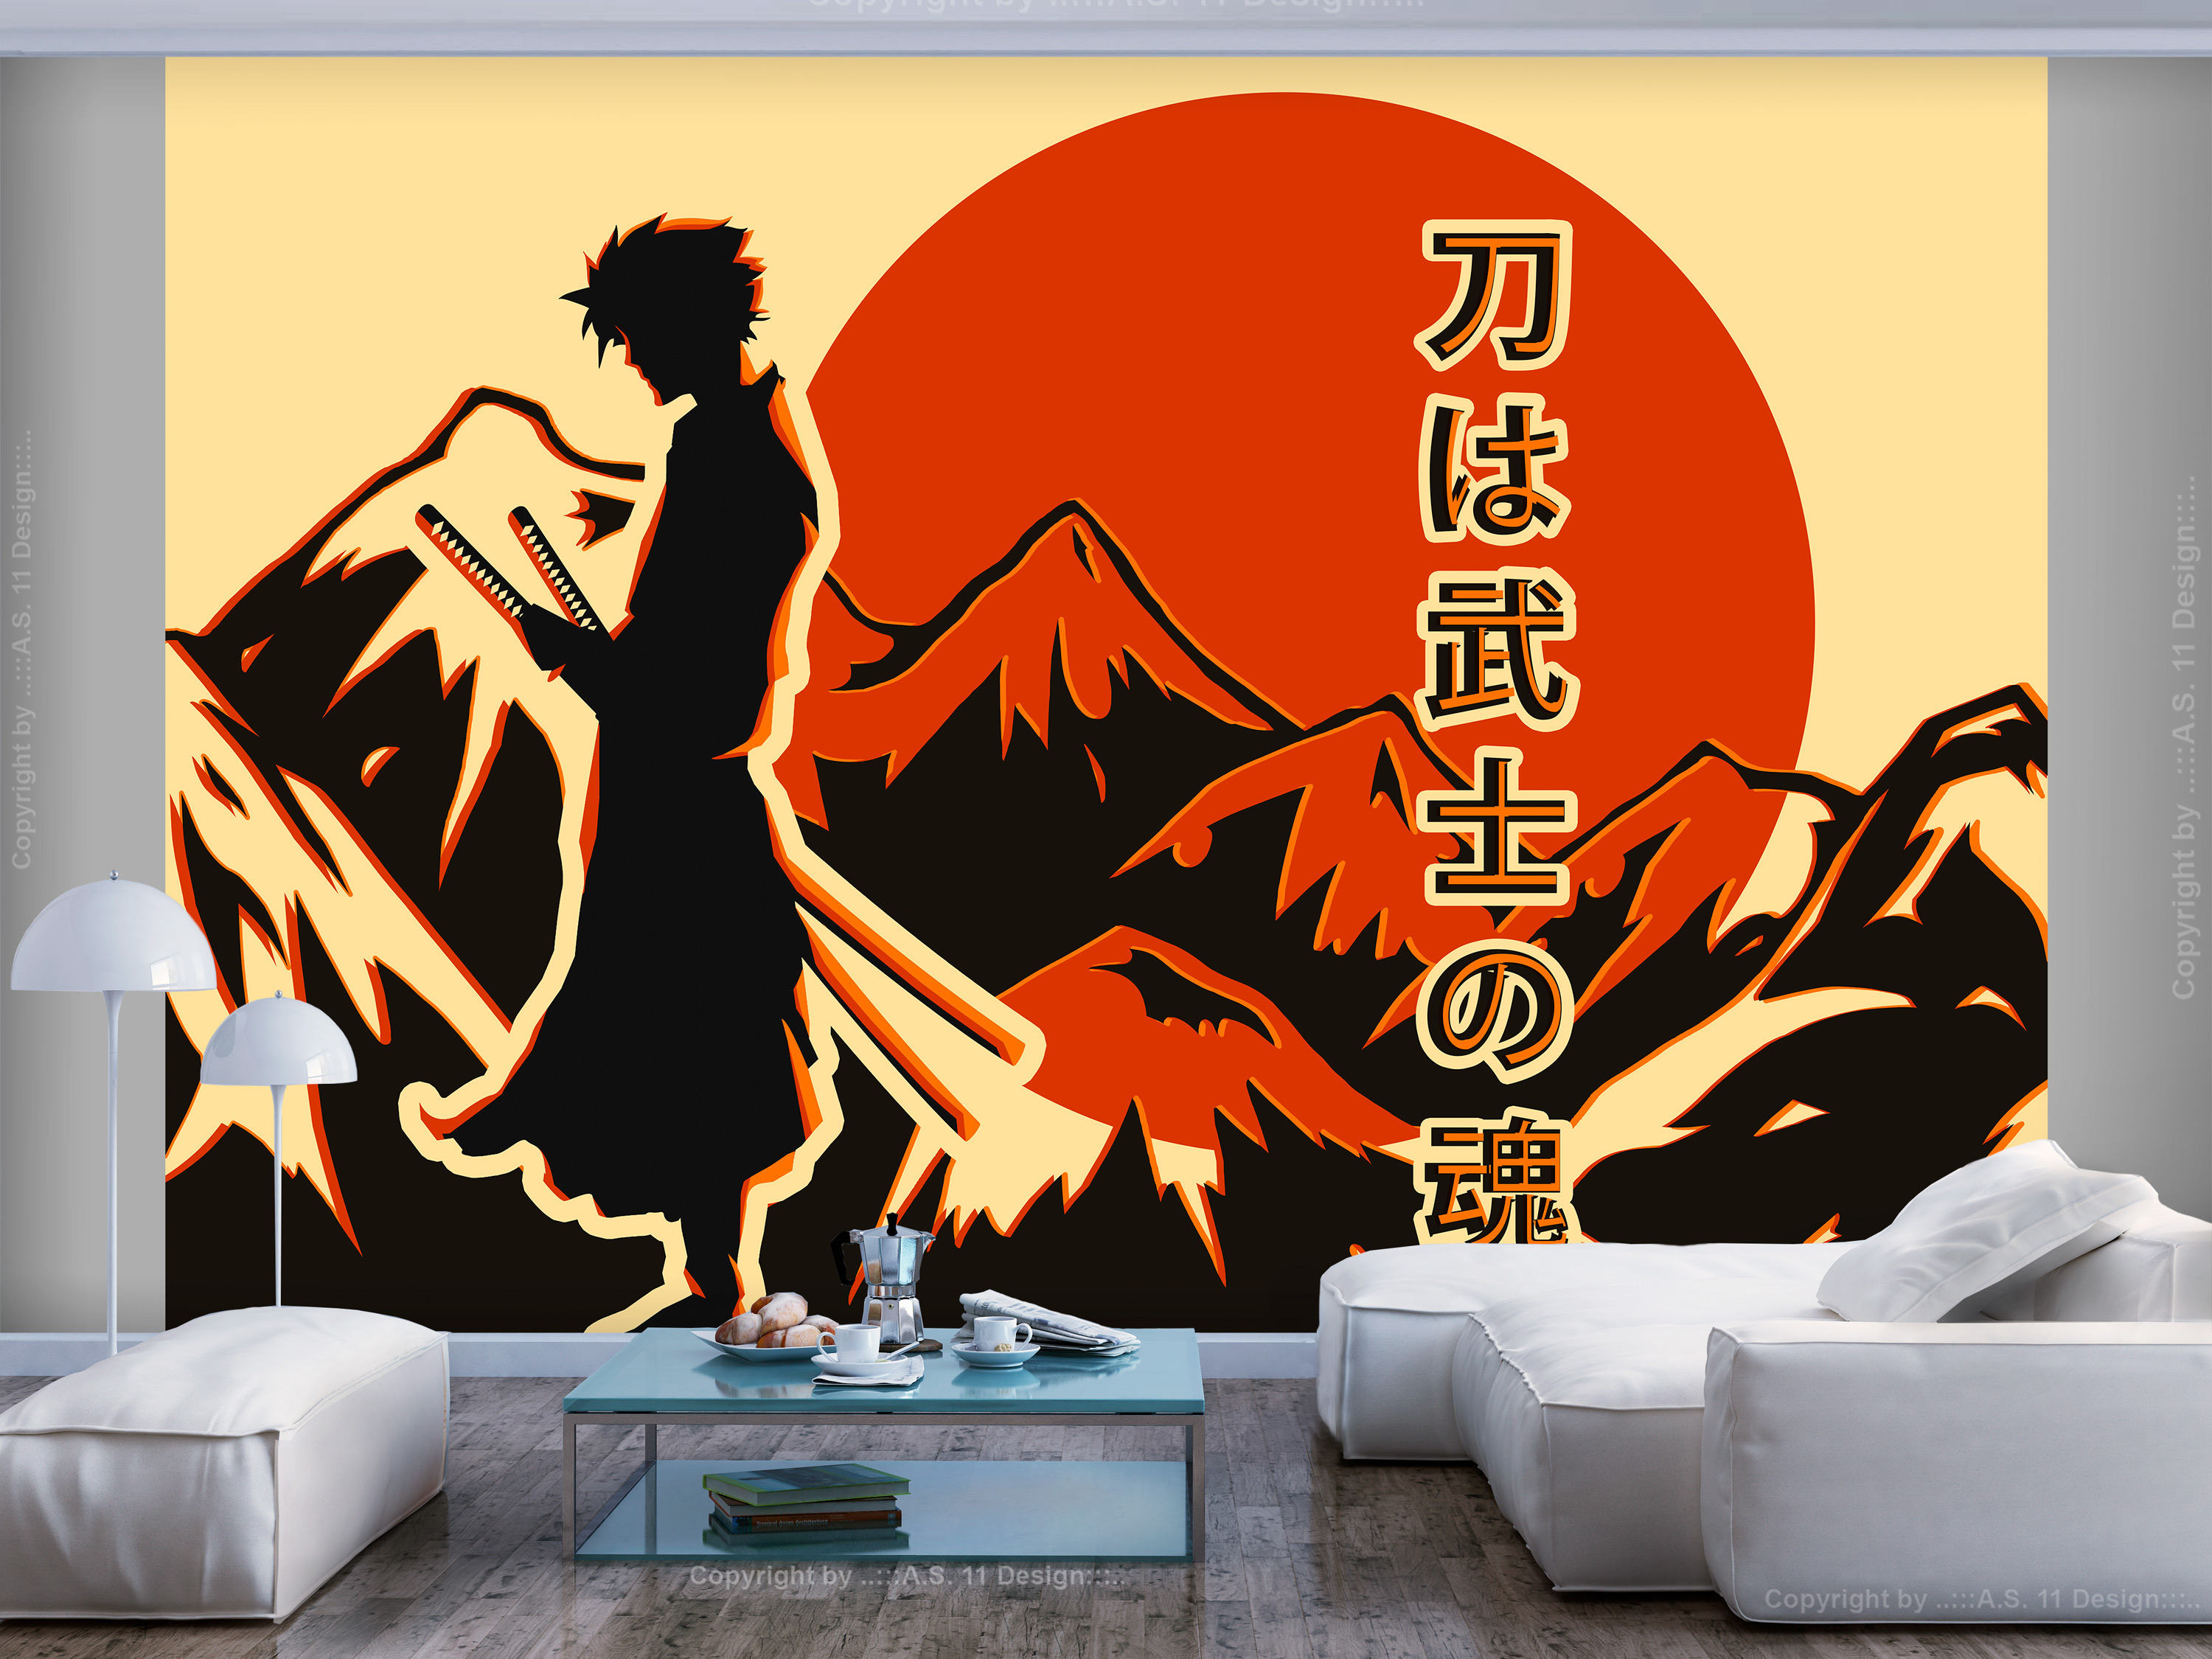 Vlies Fototapete MANGA ANIME JAPAN Tapete Wandbilder xxl 3 Farben i-A-10017-a-a